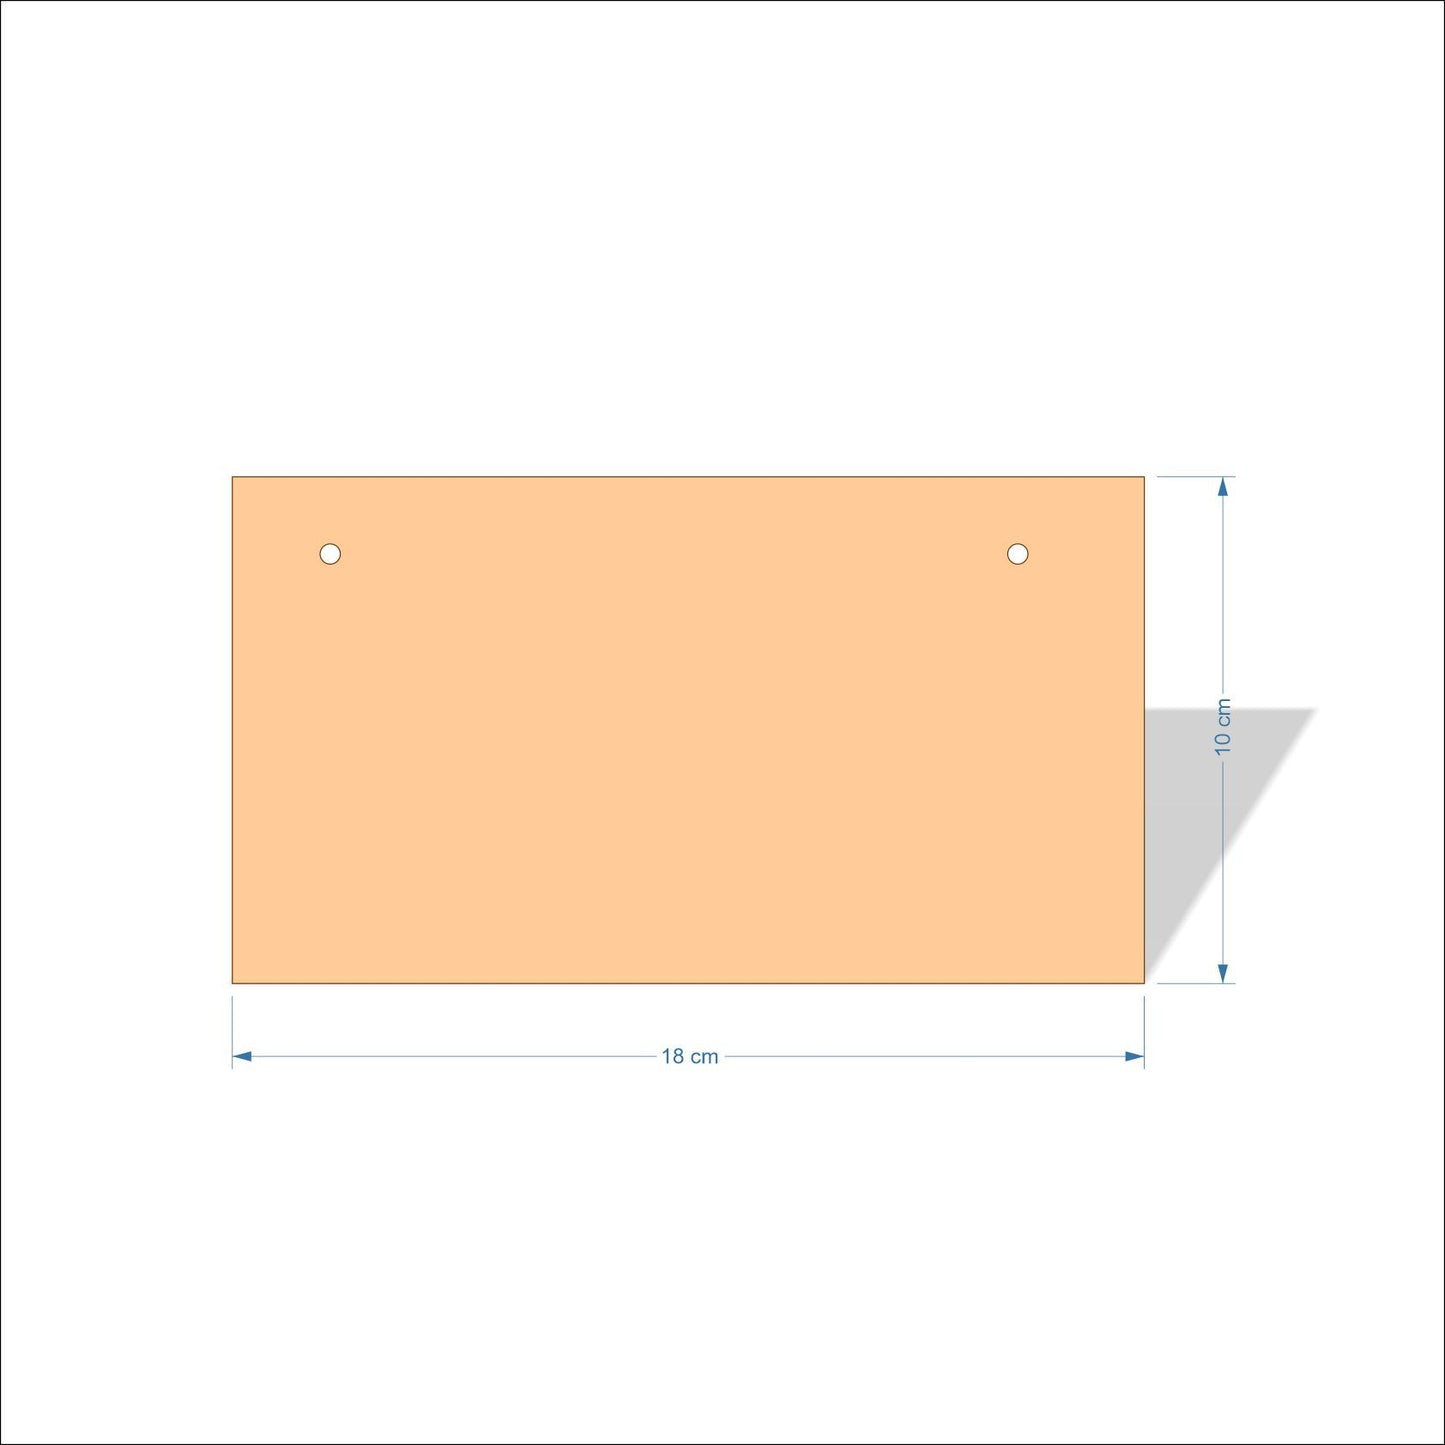 18 cm X 10 cm 3mm MDF Plaques with square corners